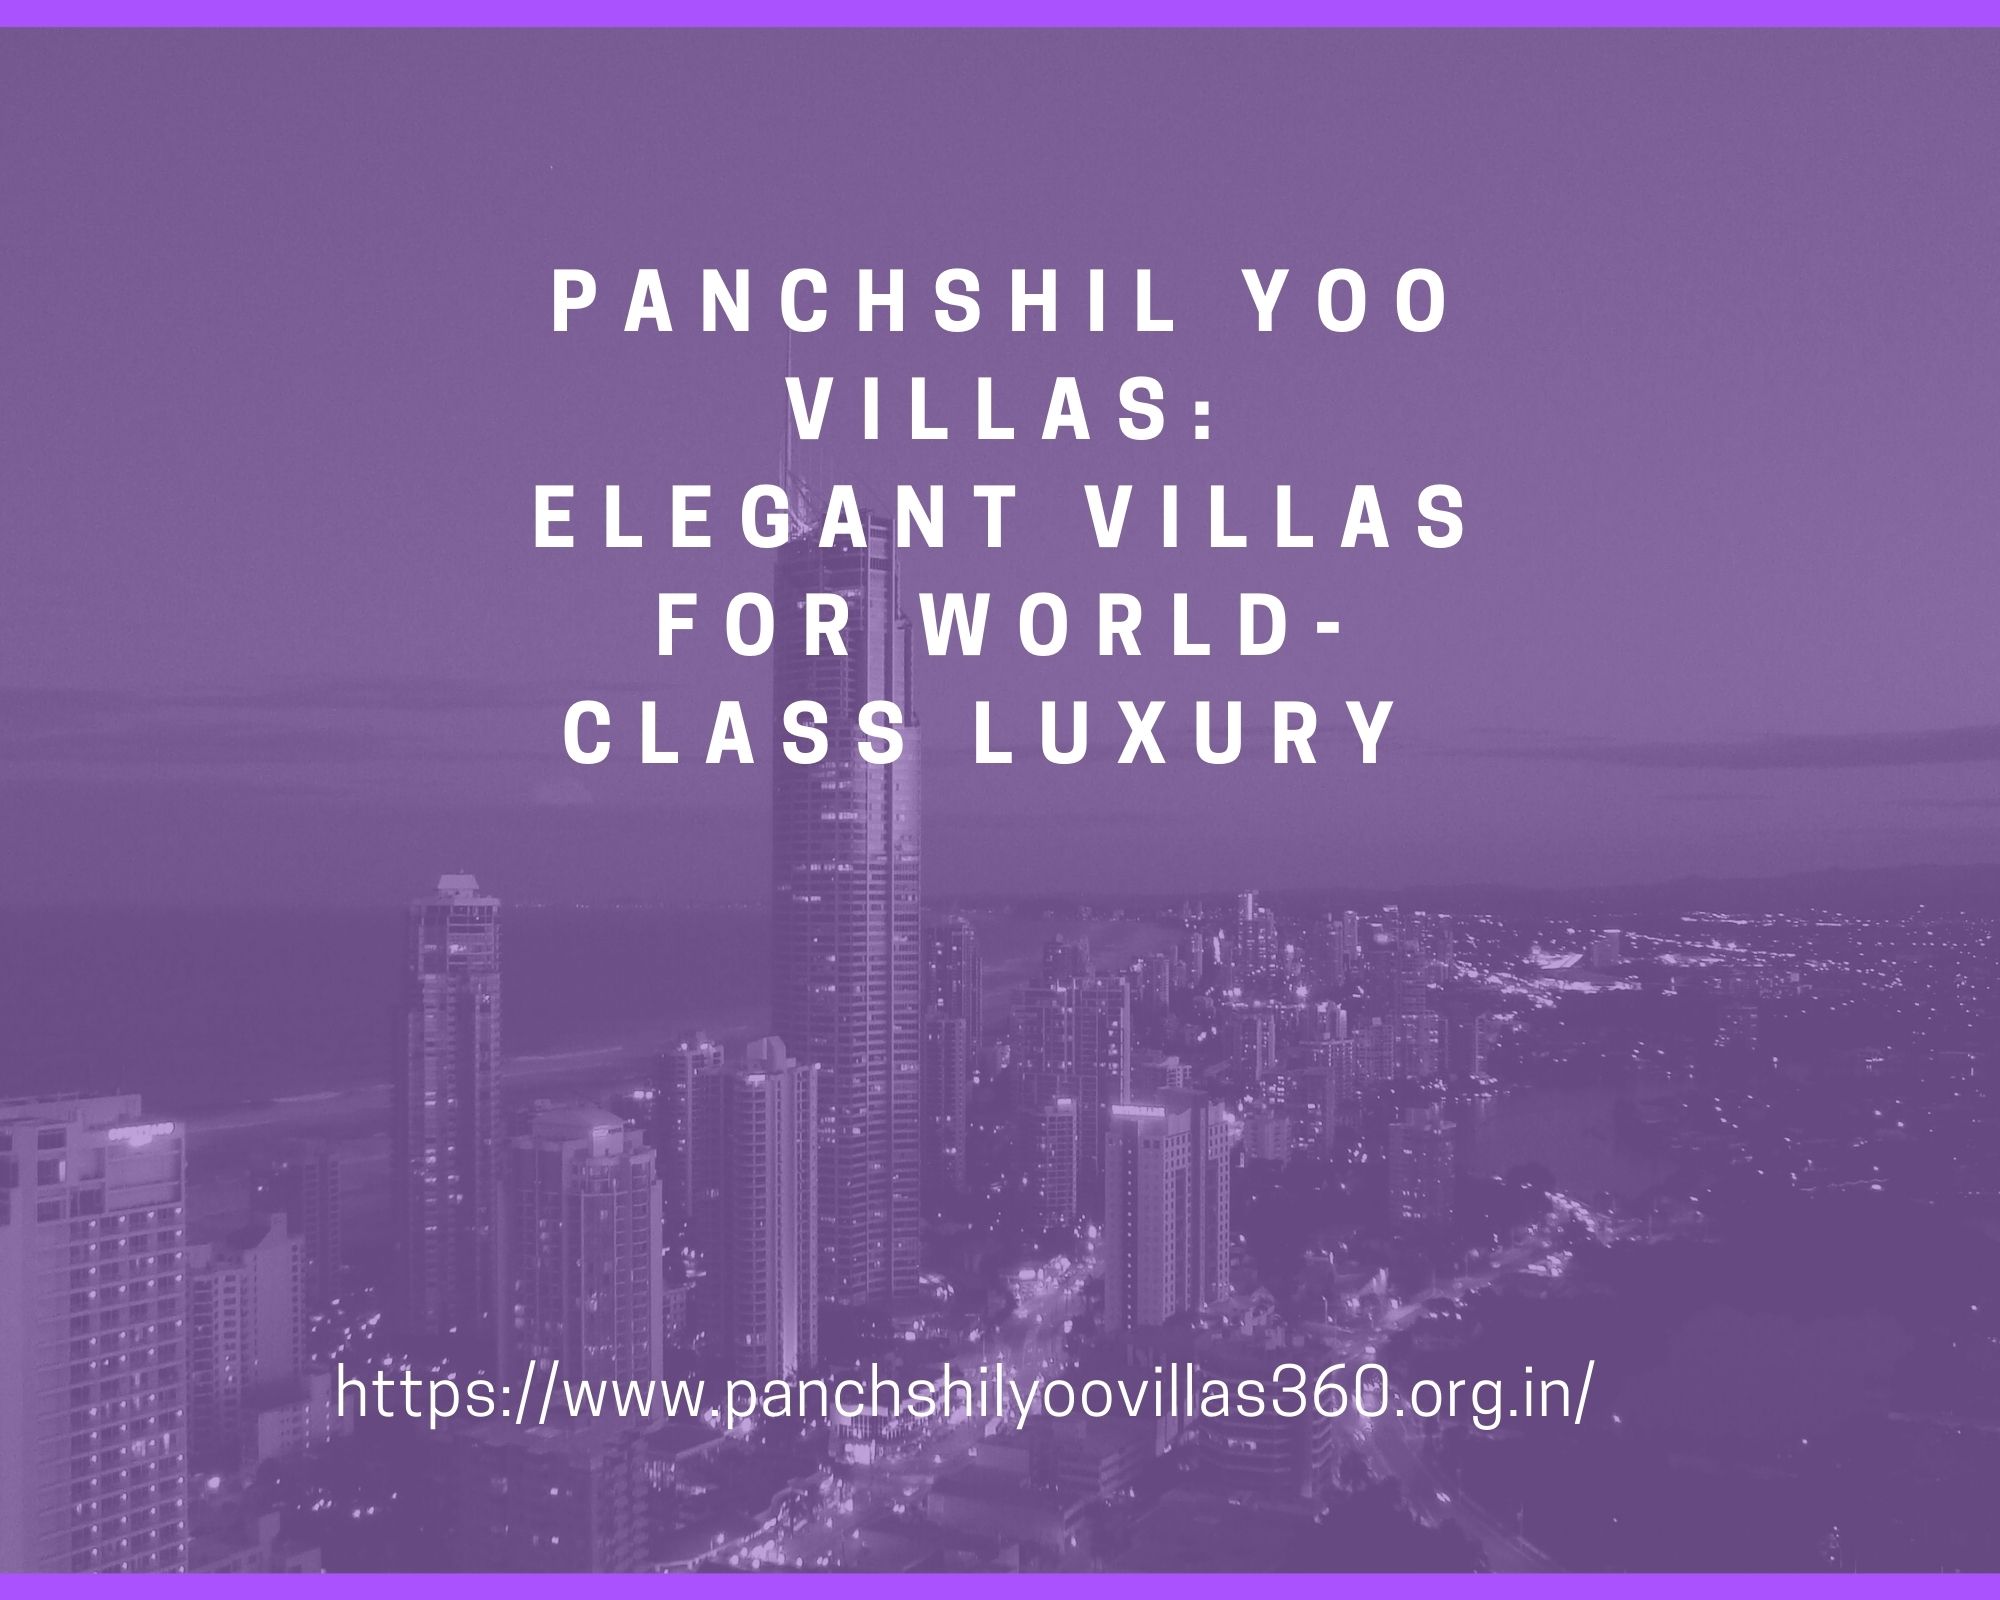 Panchshil Yoo Villas: elegant villas for world-class luxury